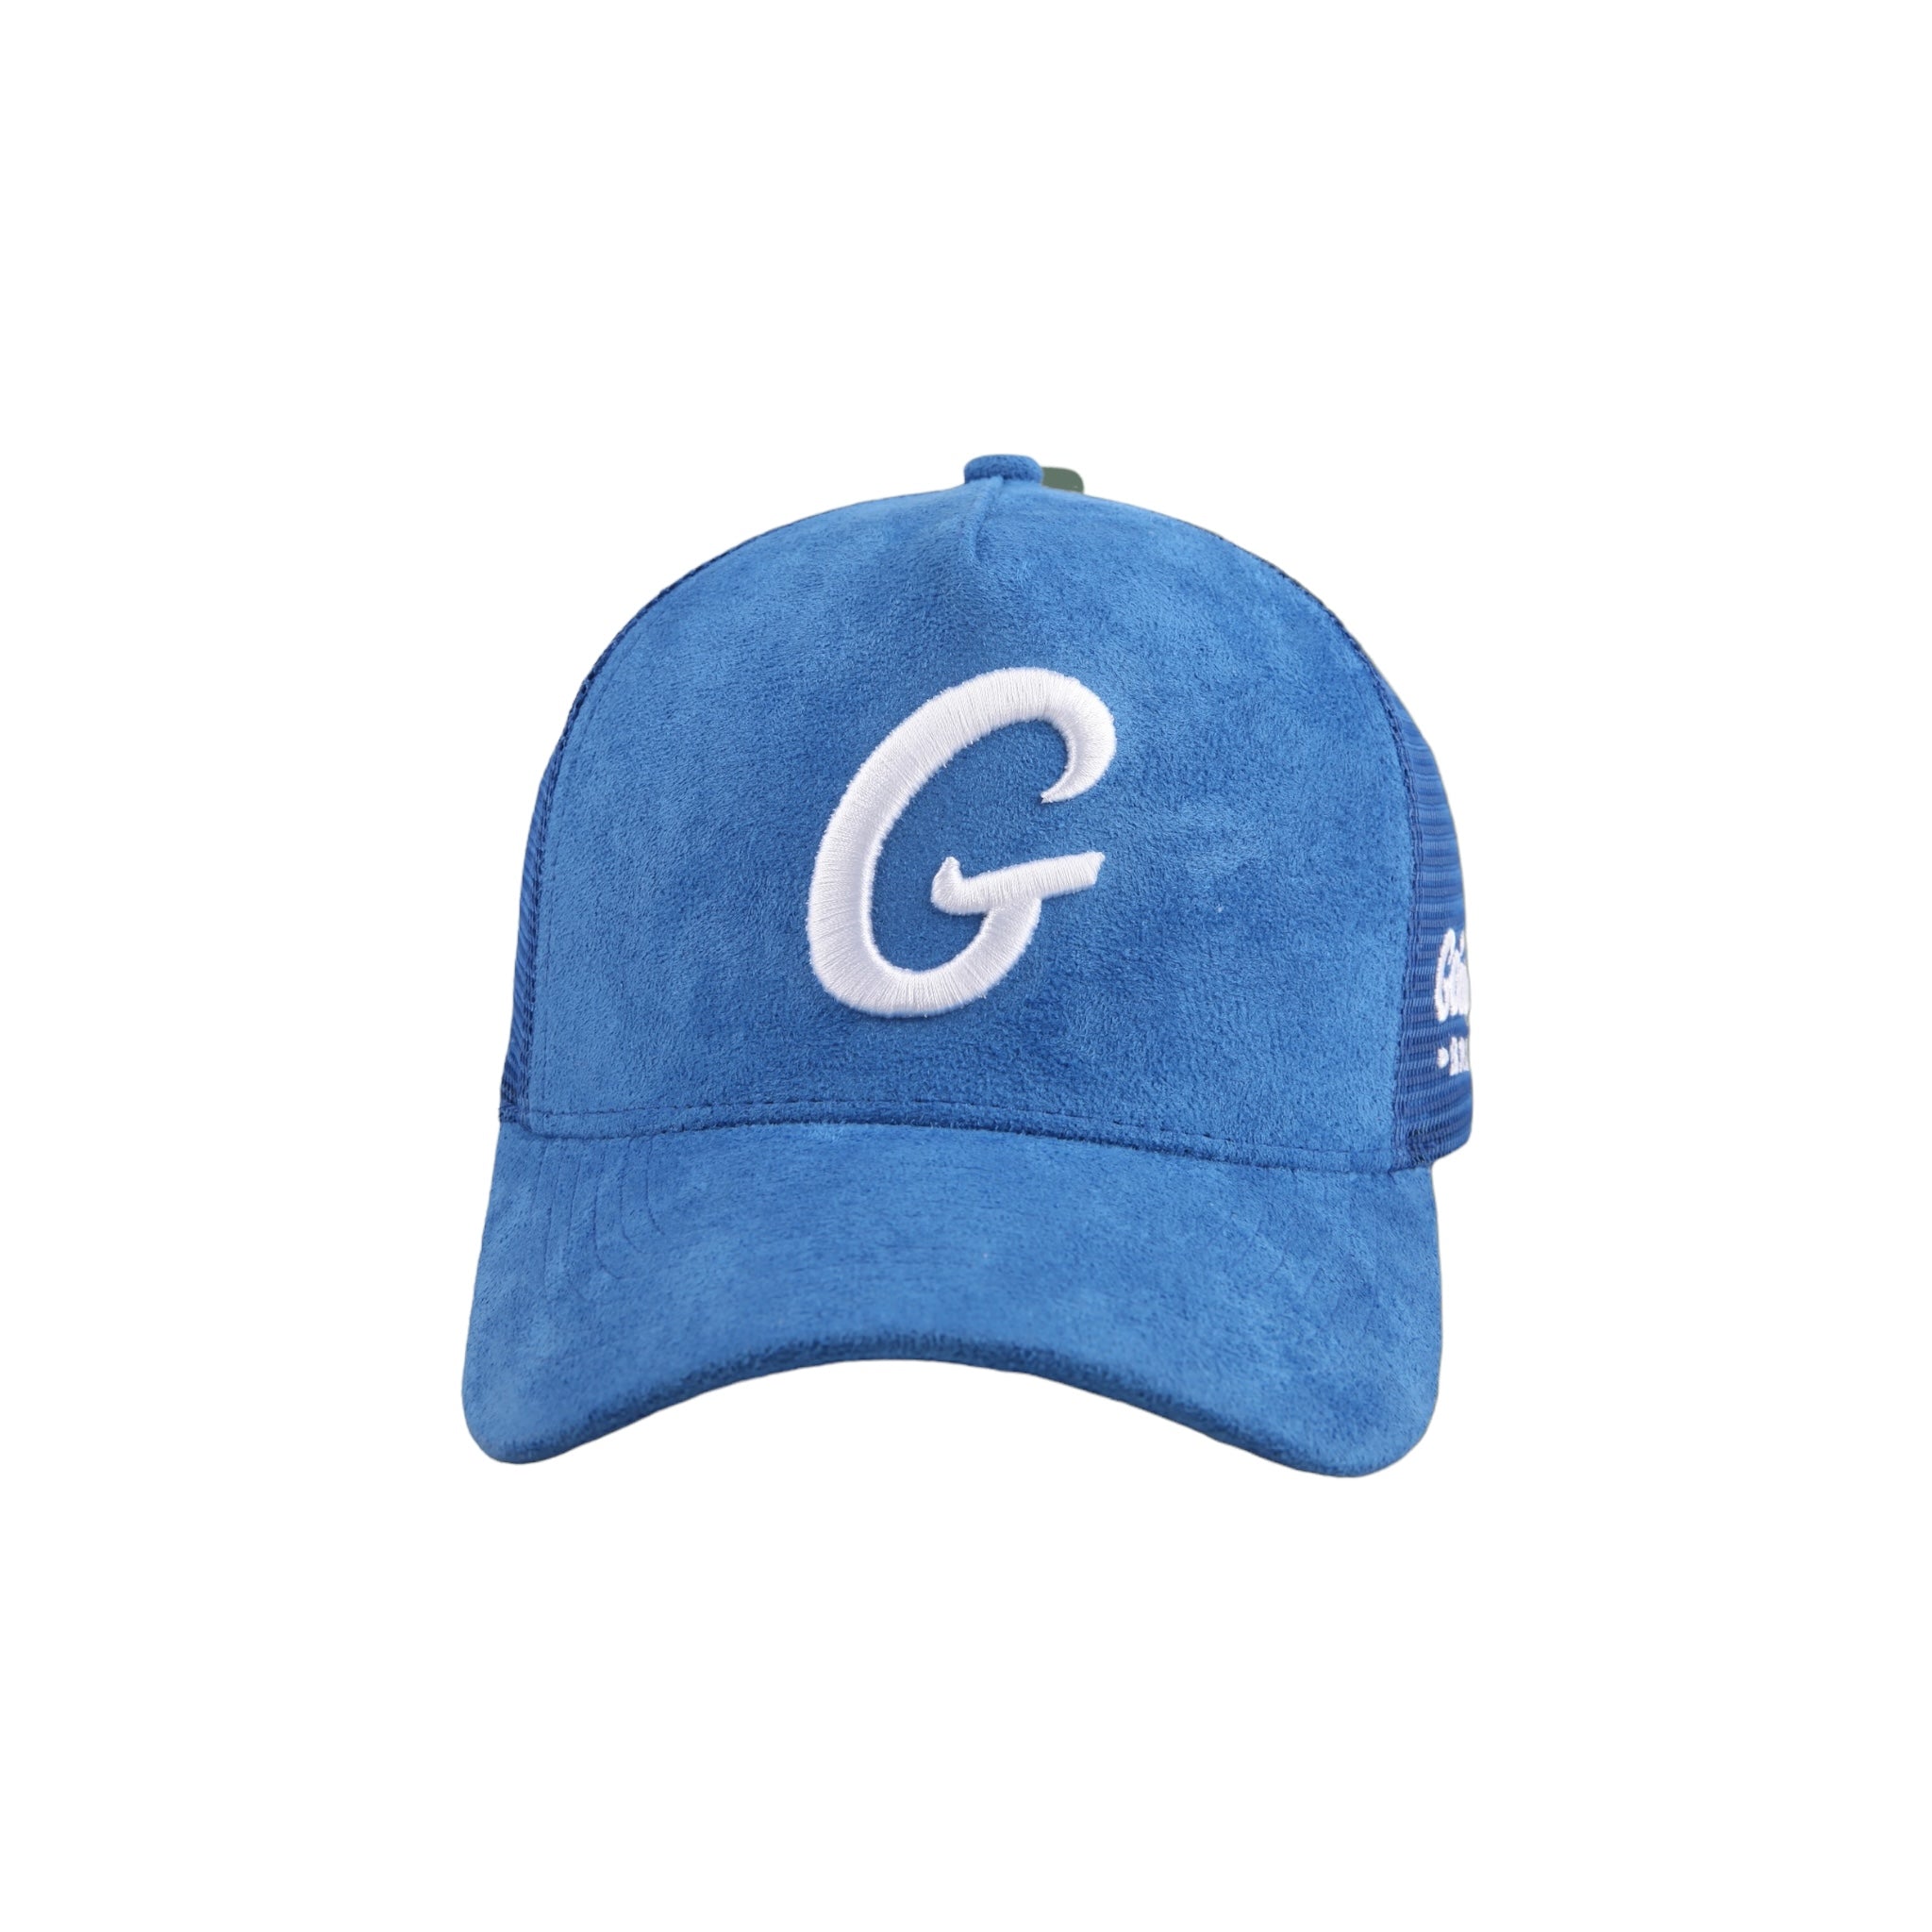 Big G Sky Blue “Suede” Trucker Hat